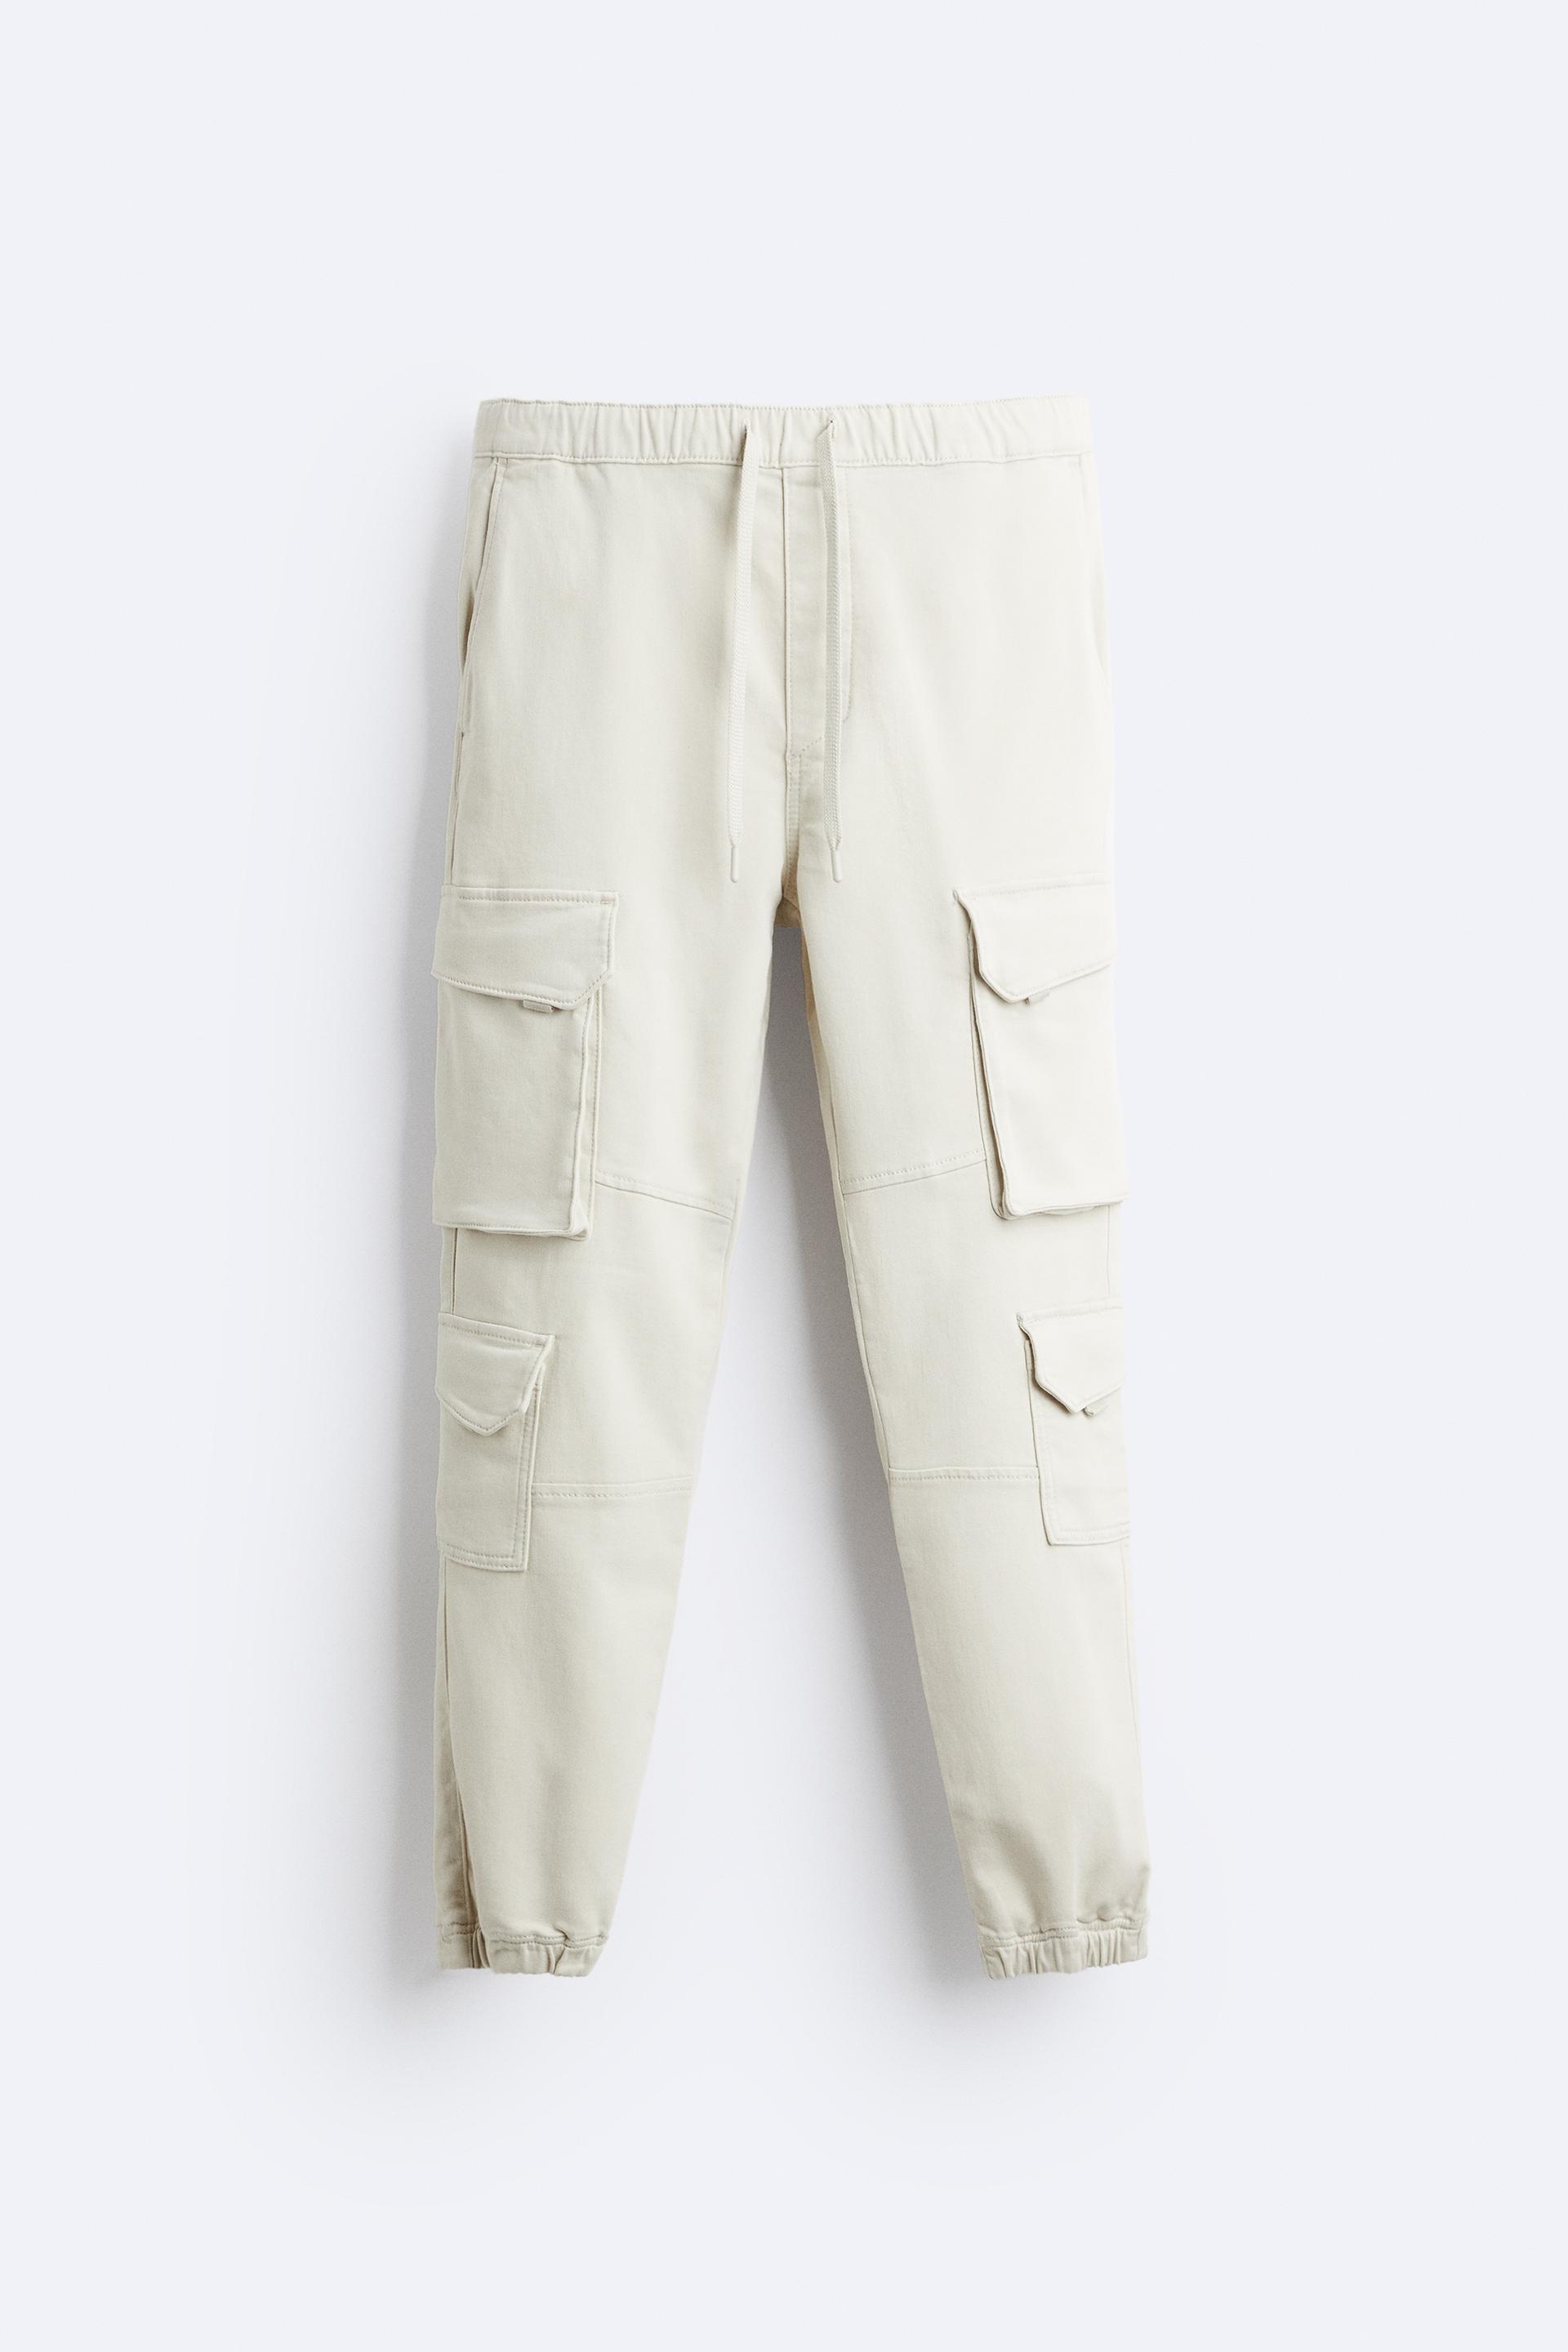 Zara Full Length Light Khaki Cargo Cotton Pants New Measurements XS S M L XL